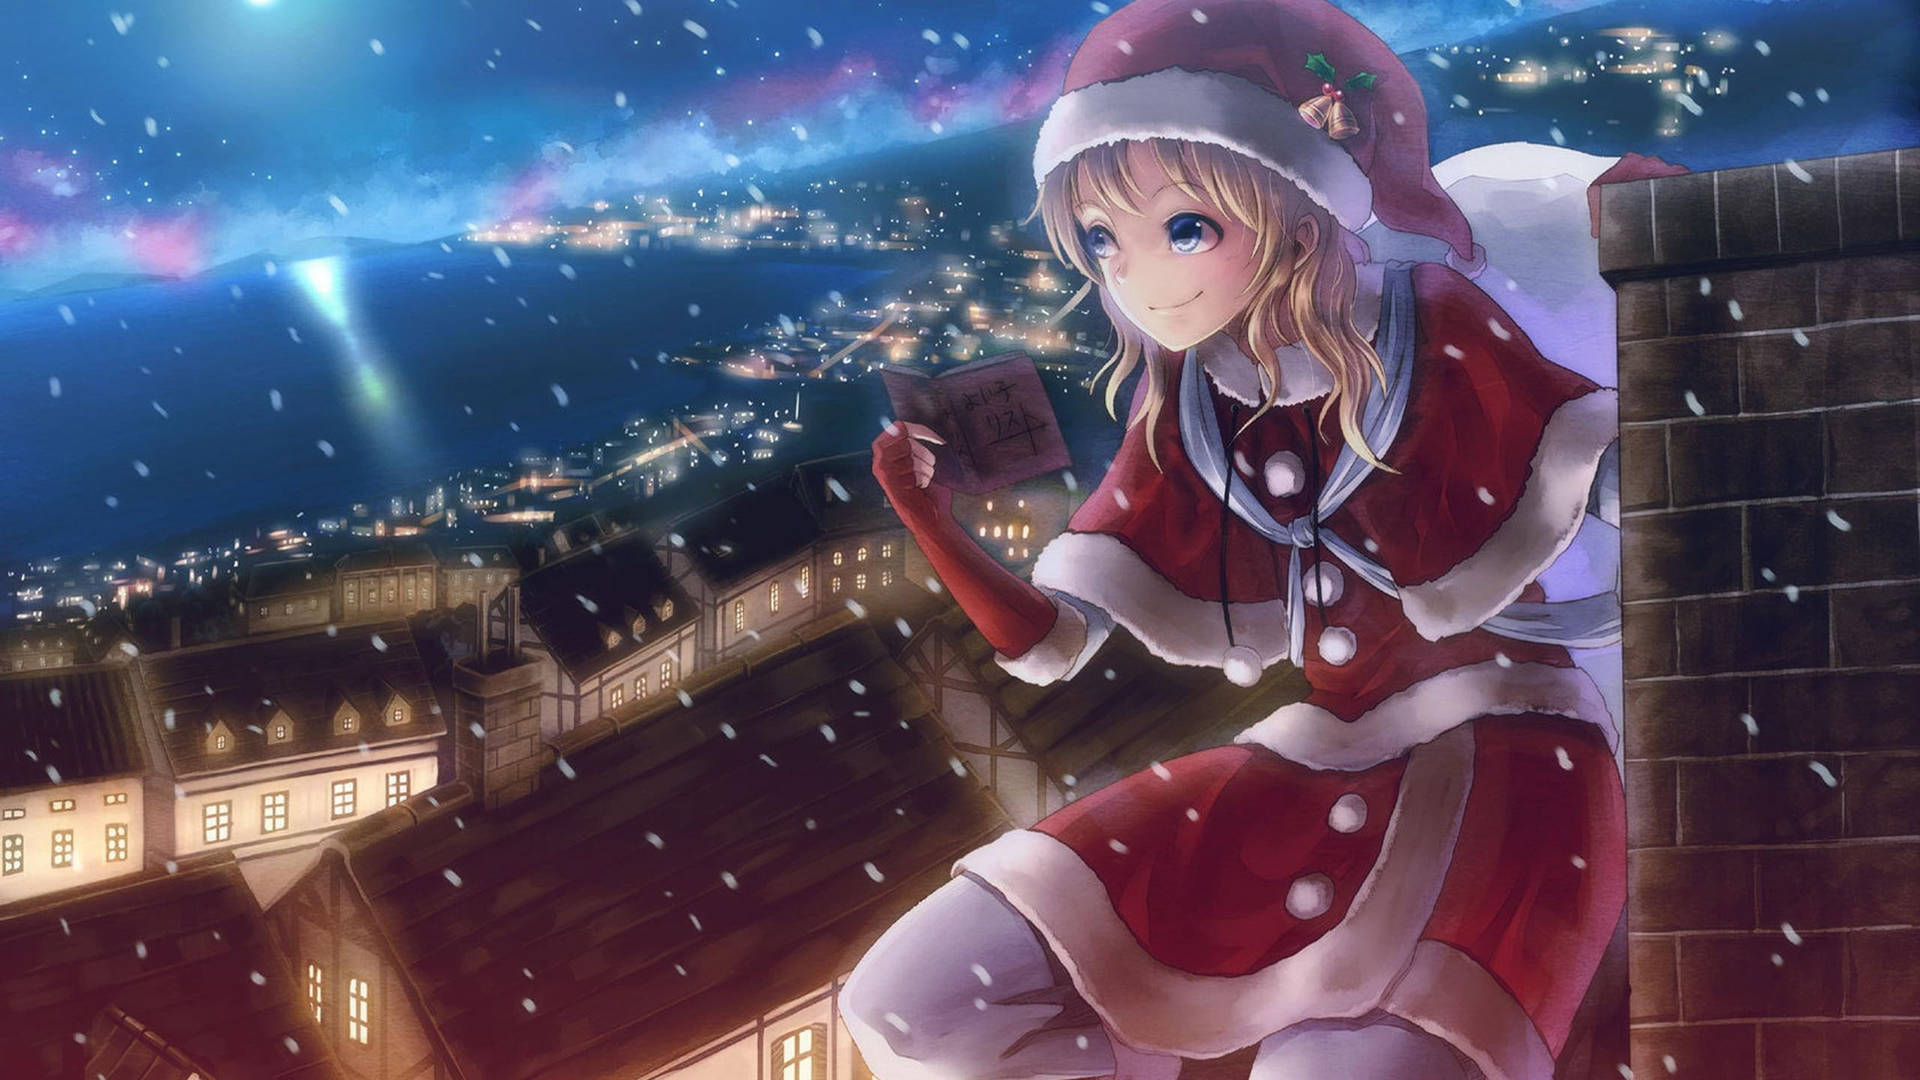 Anime Christmas Santa Girl On Chimney Background